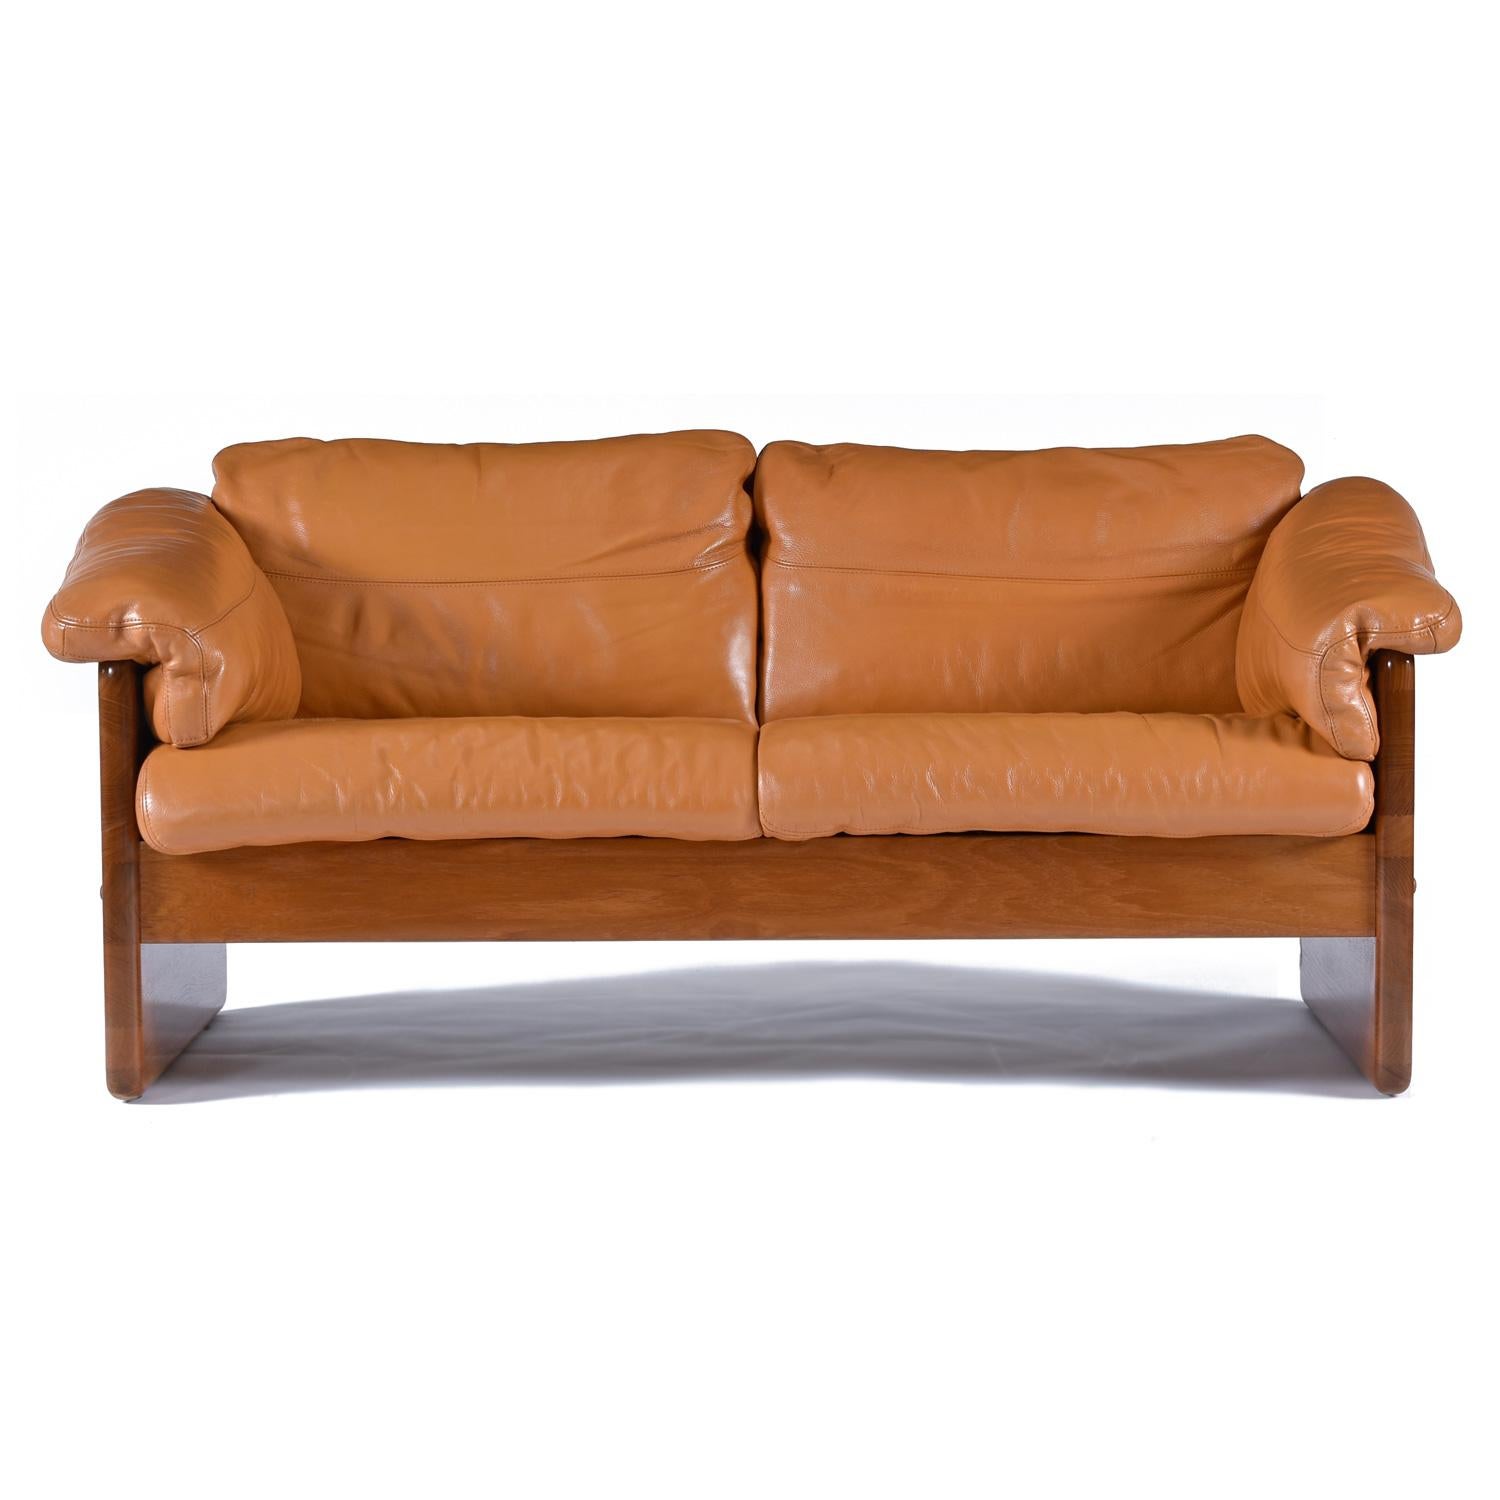 Mid-Century Modern Restored Original Leather Solid Teak Danish Loveseat Sofa by A. Mikael Laursen